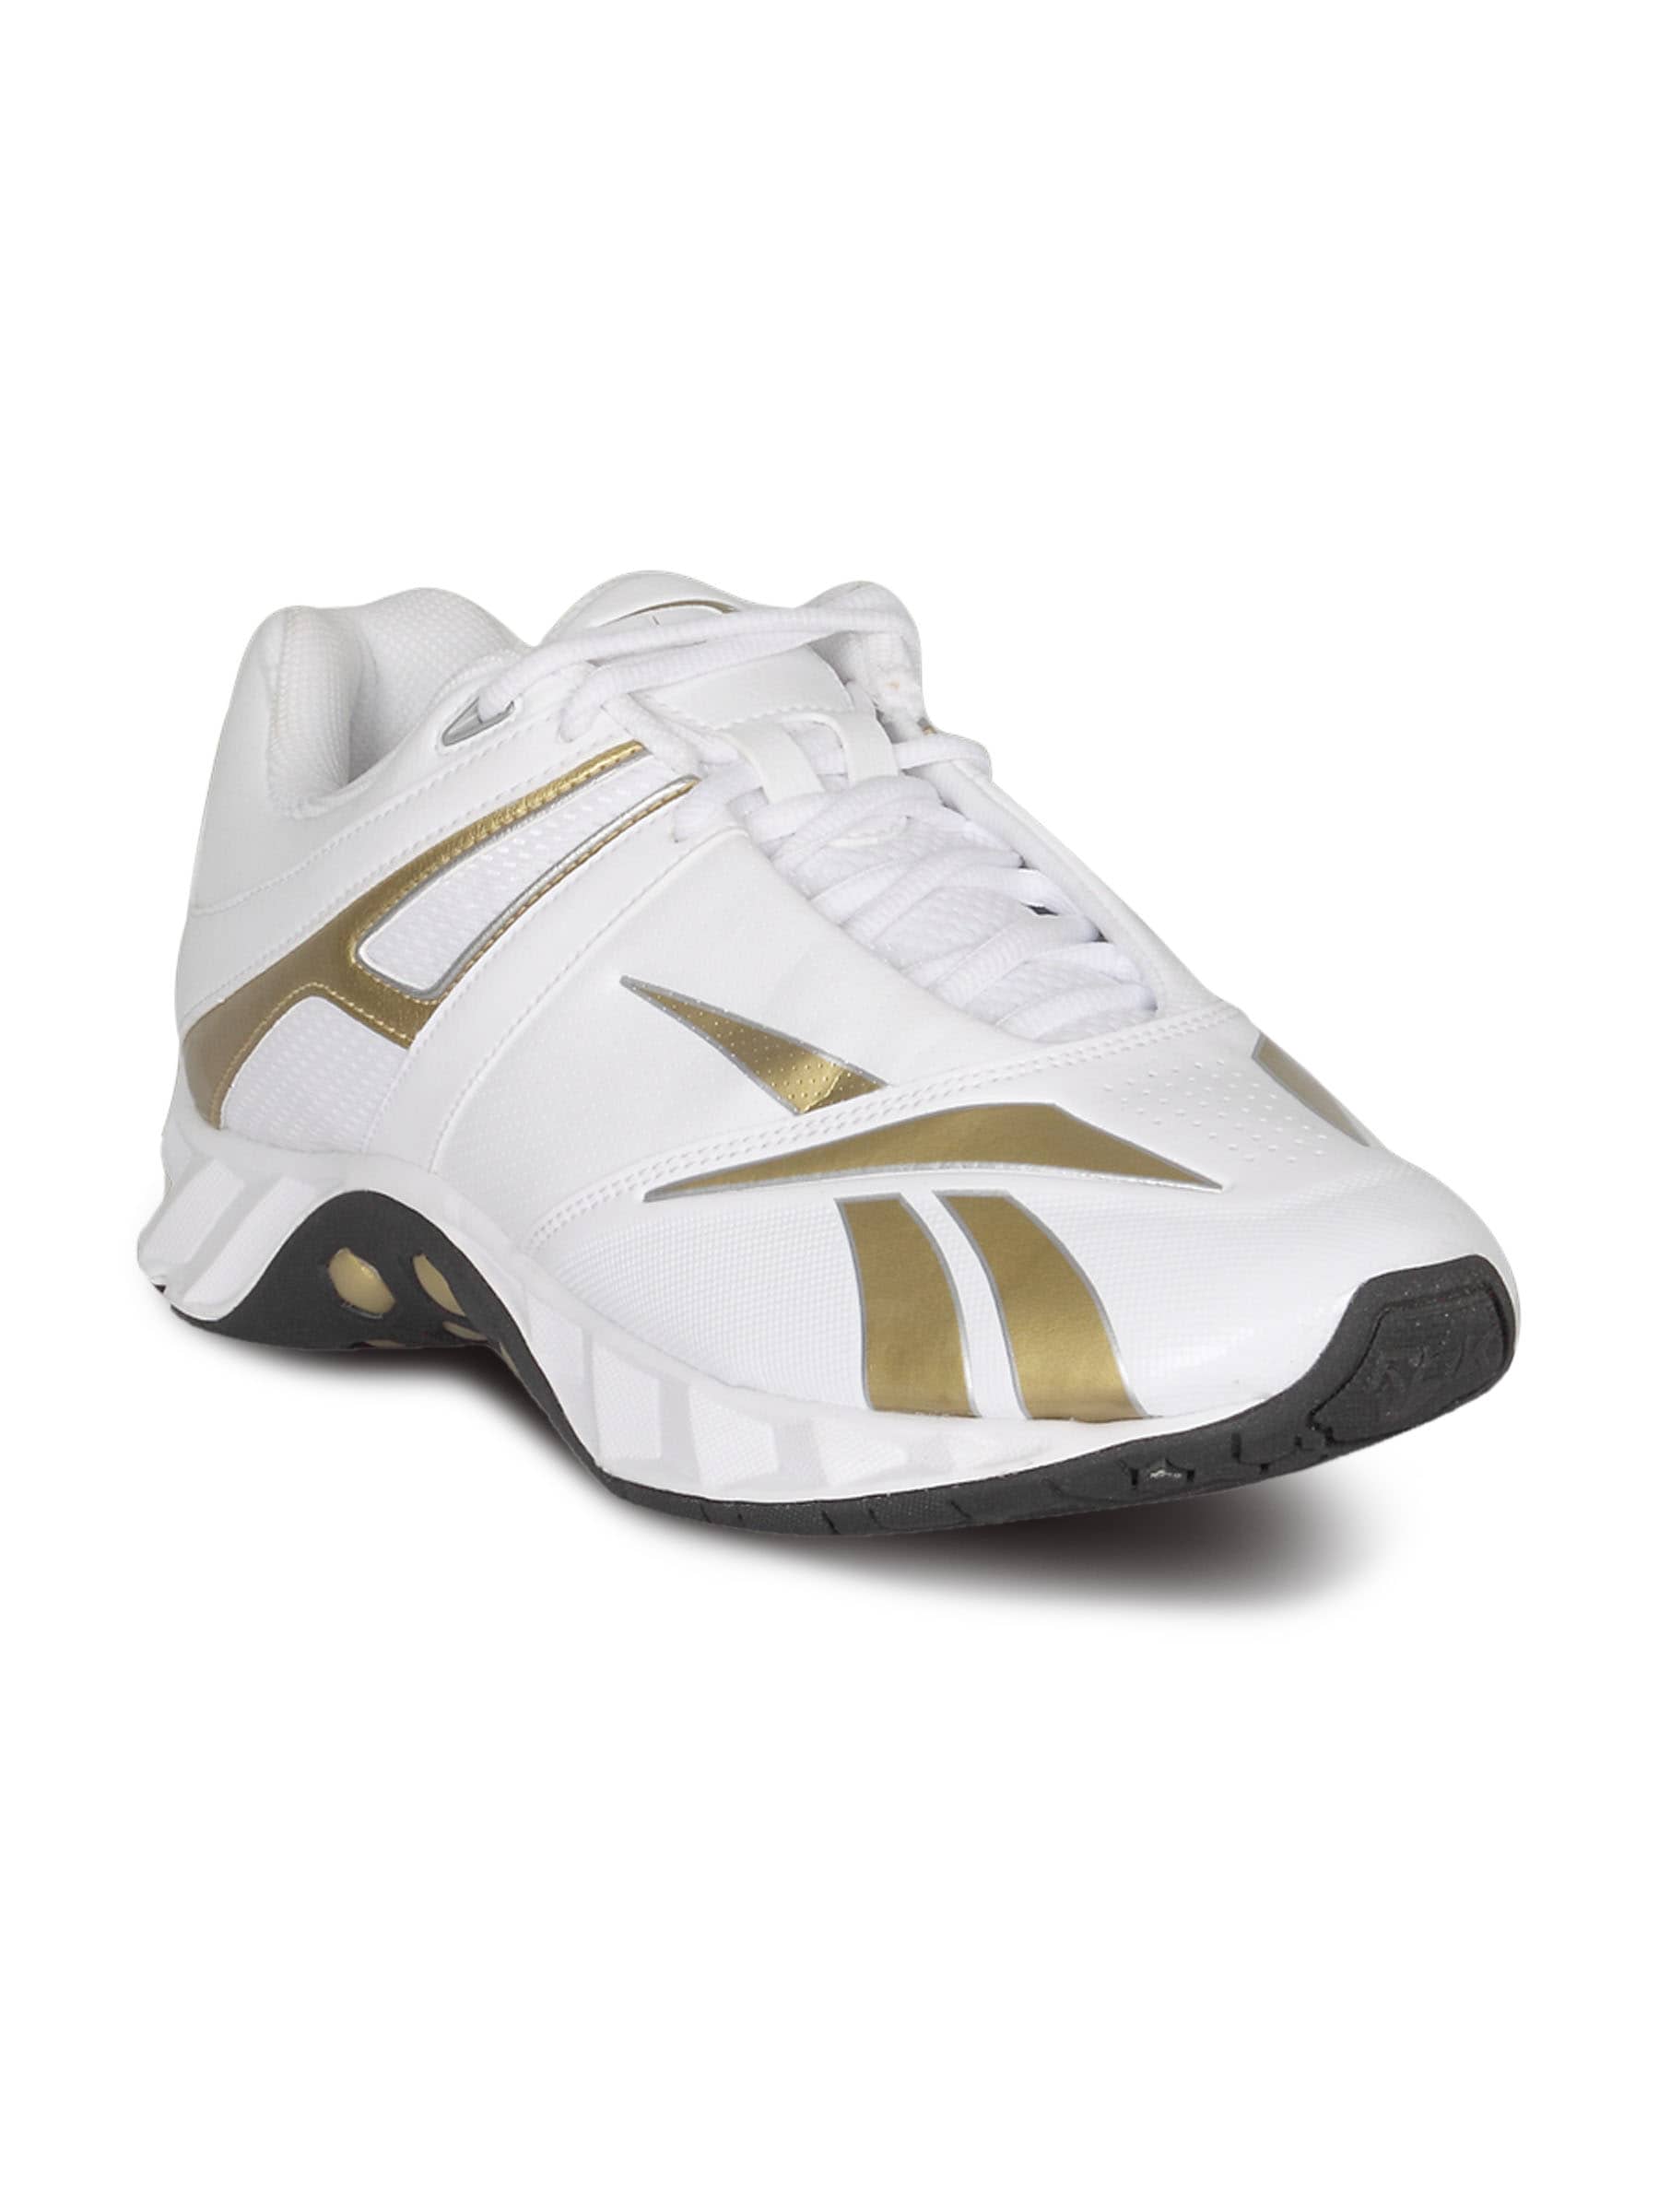 Reebok Men's Dhoni Trainer White Gold Shoe